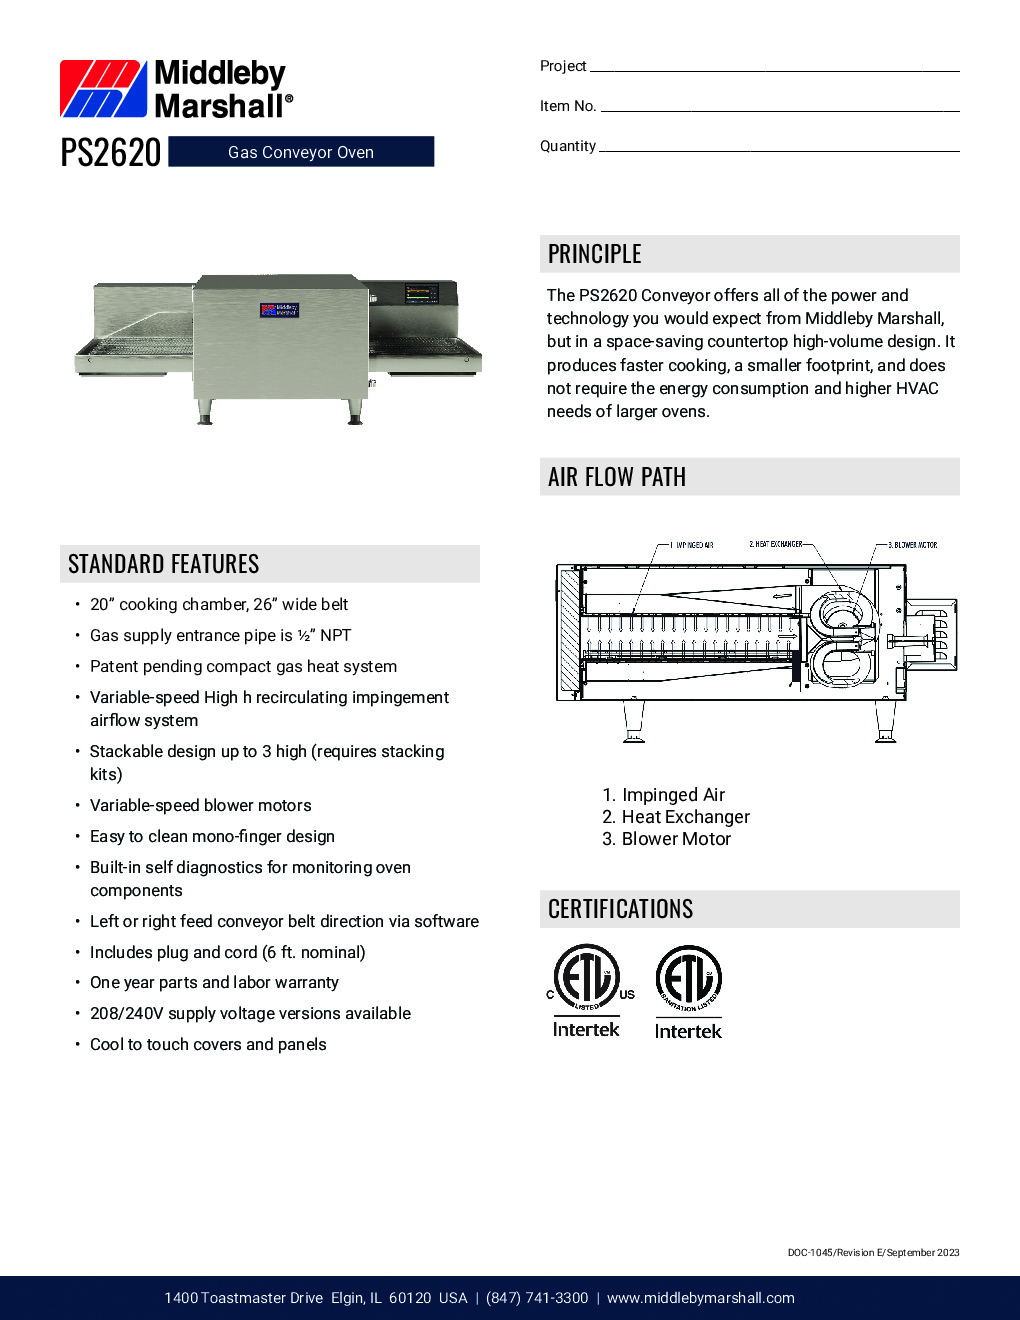 Middleby Marshall PS2620G-3 Conveyor Gas Oven